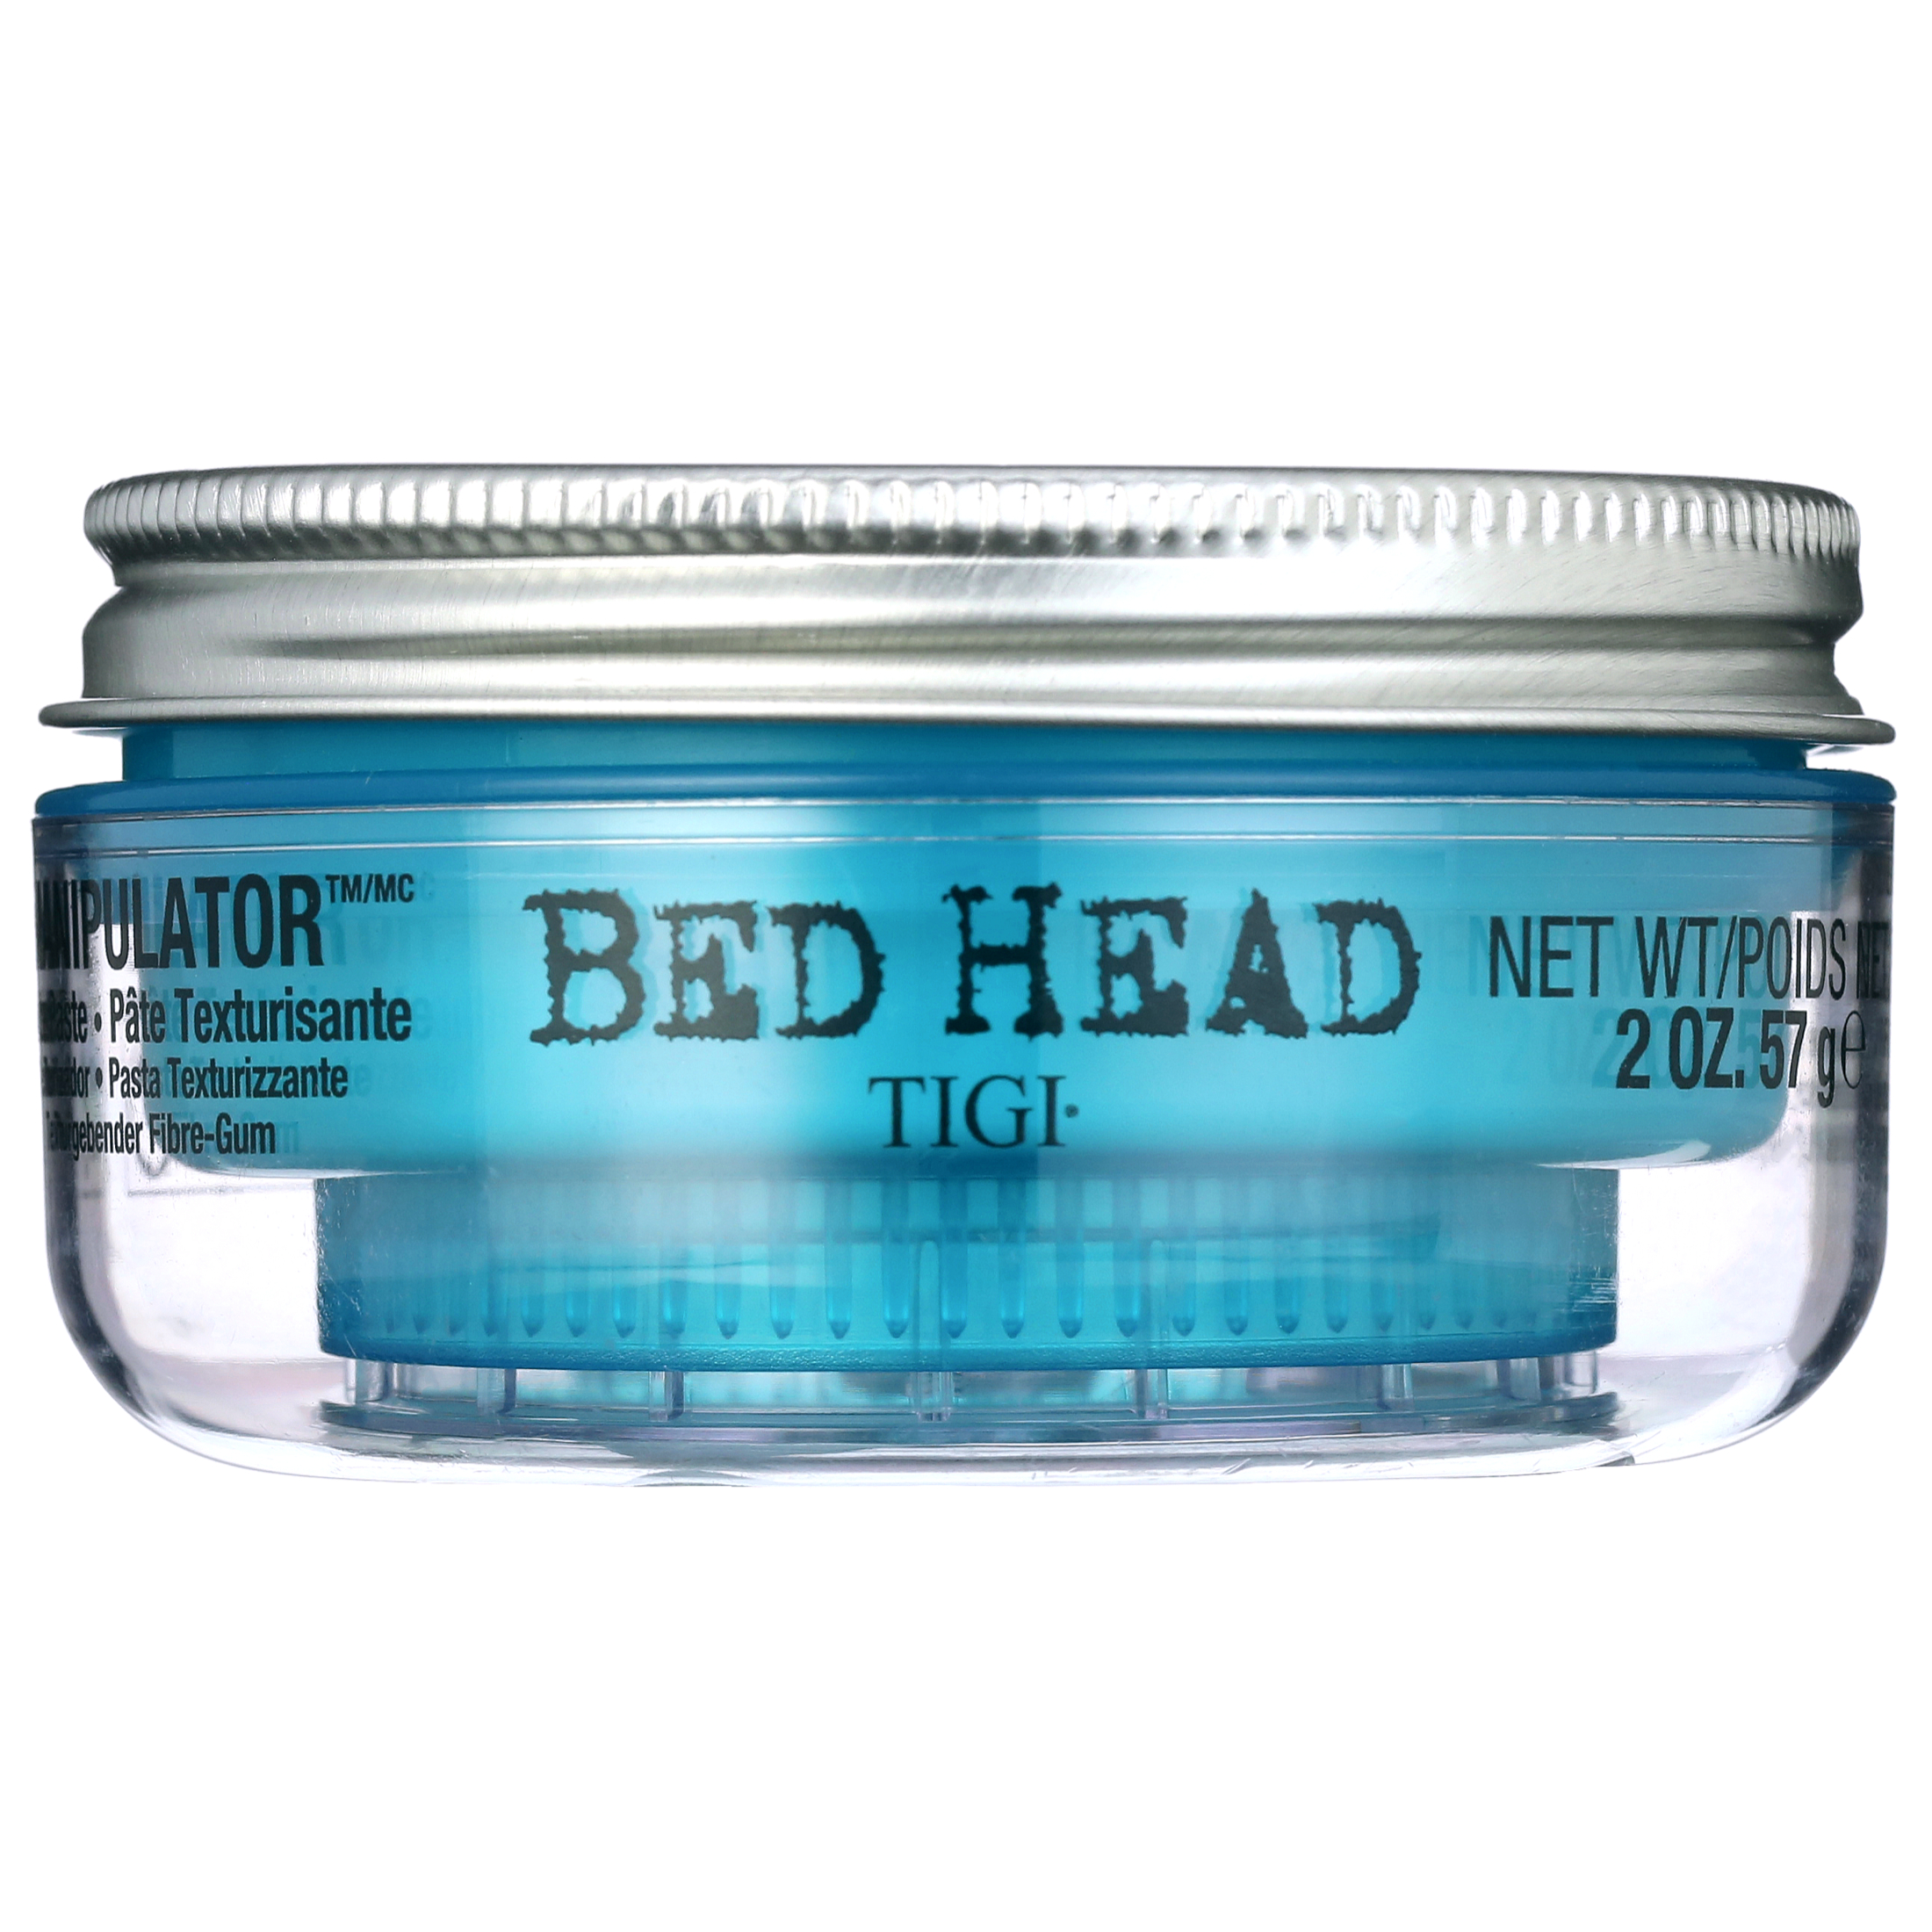 TIGI Bed Head Manipulator Texture Paste, 2.0 OZ - image 1 of 5